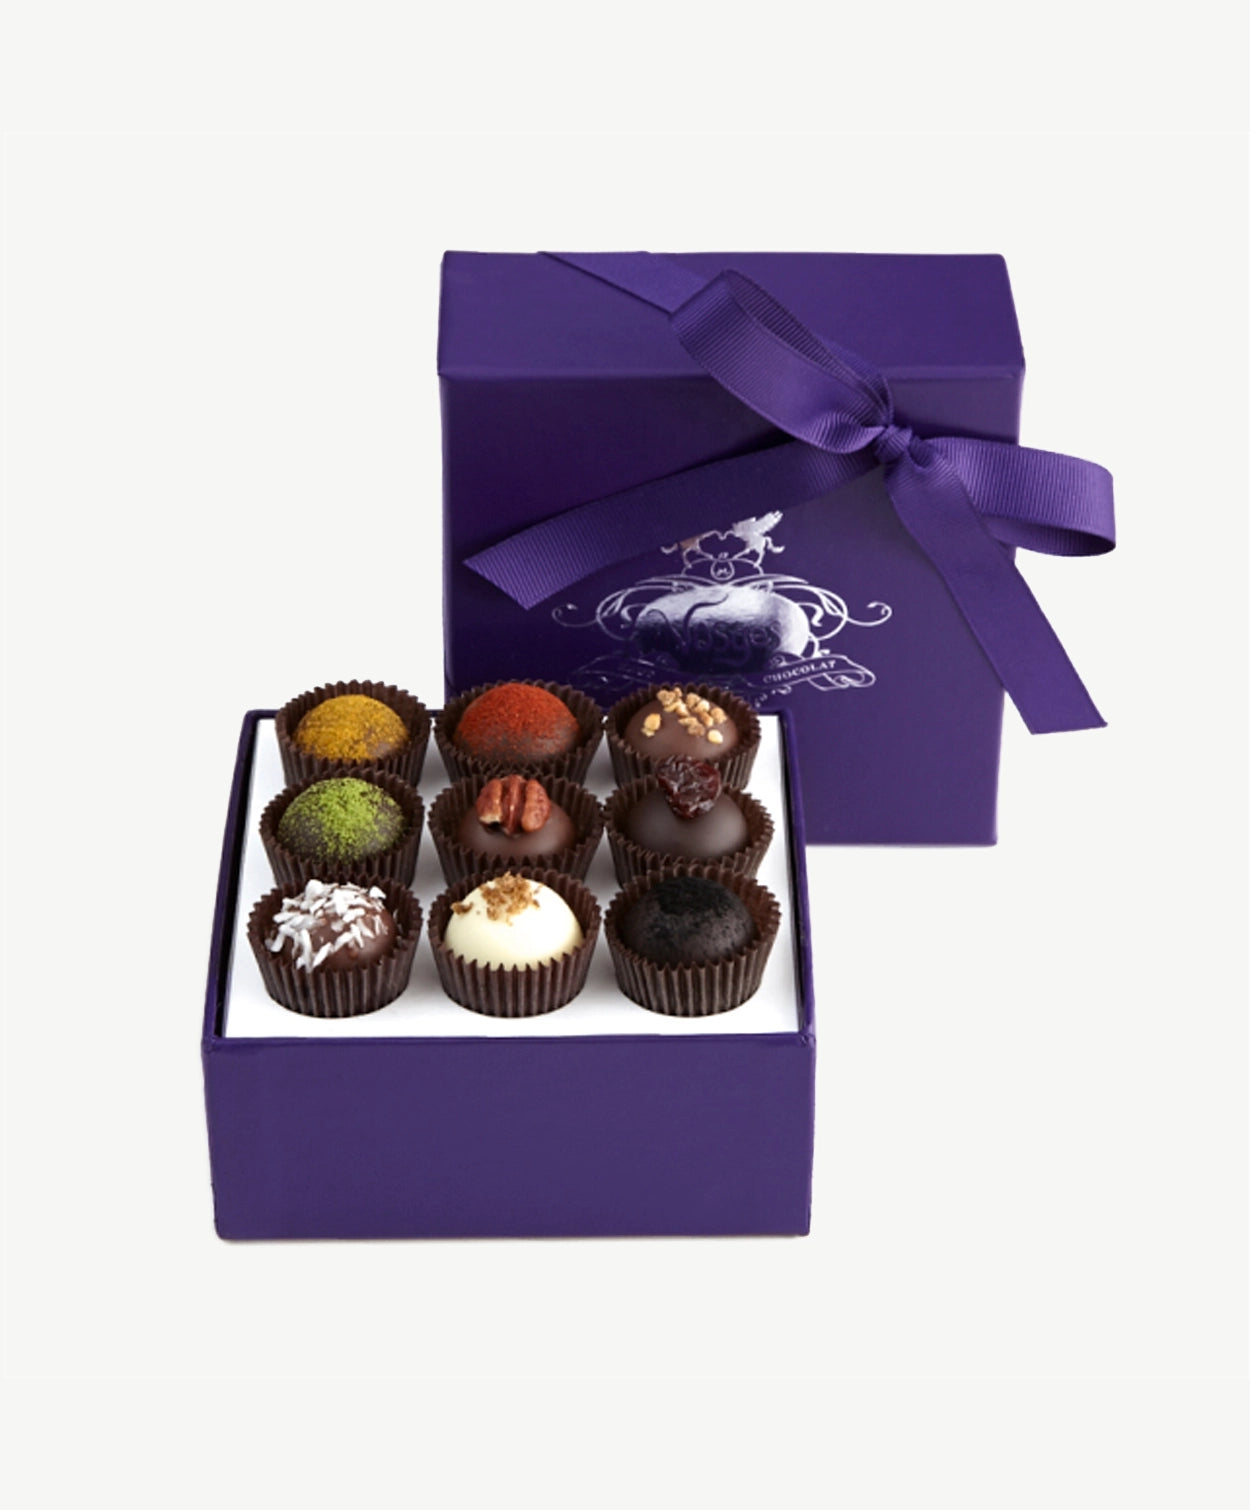 Saint-Bris and Chocolate Pairing Giftbox